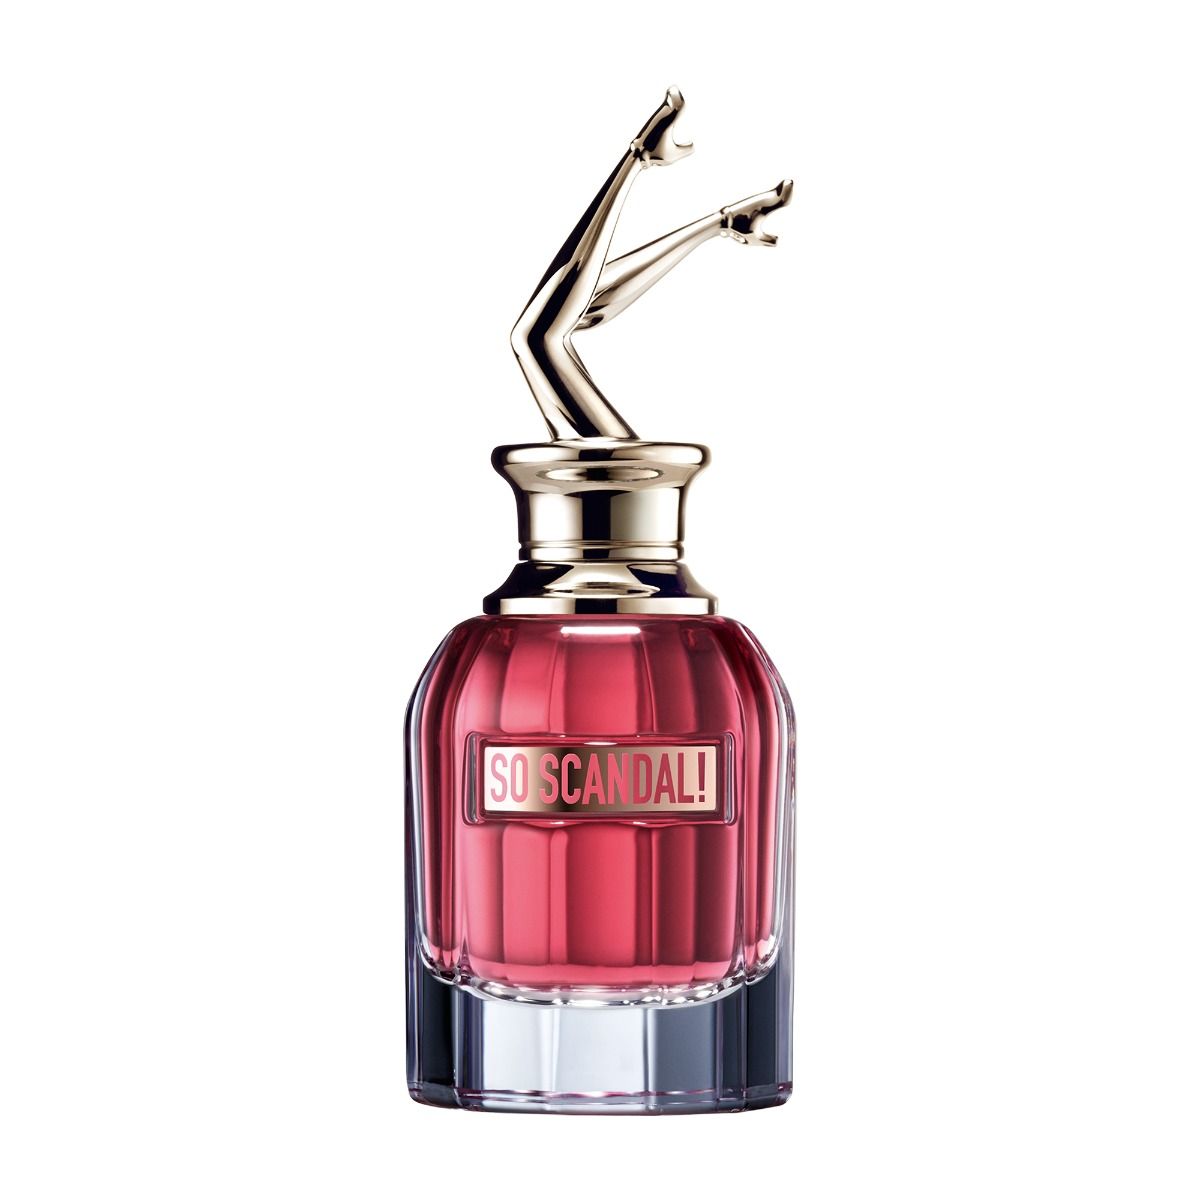 So Scandal! Jean Paul Gaultier perfume - a new fragrance ...